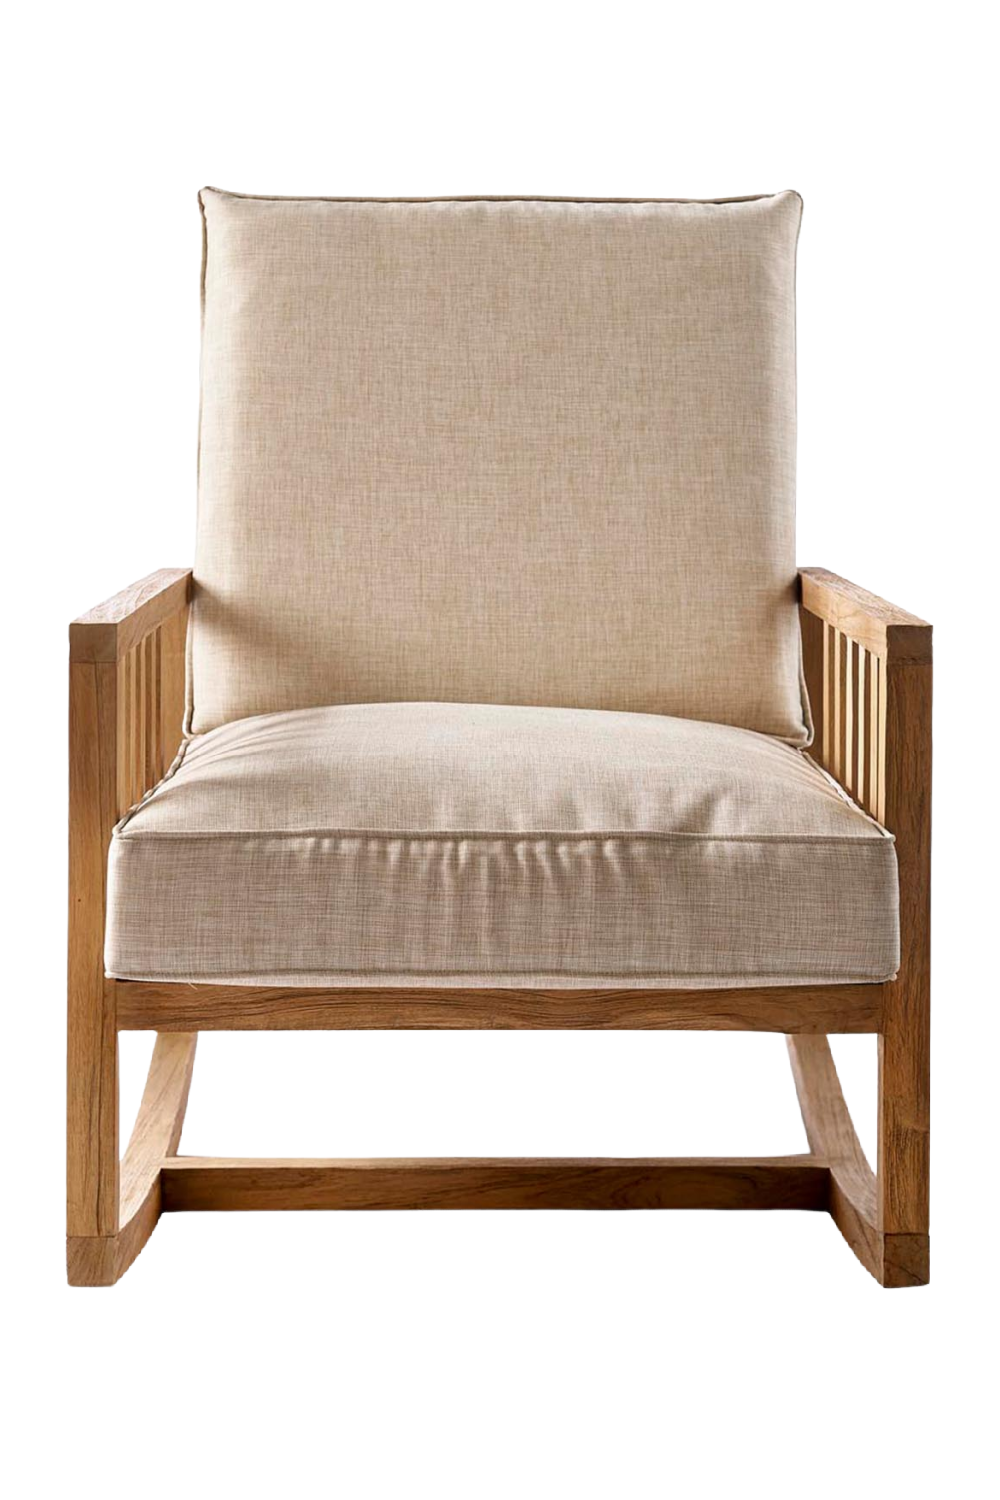 Wooden Cushioned Rocking Chair | Rivièra Maison Panama | Woodfurniture.com